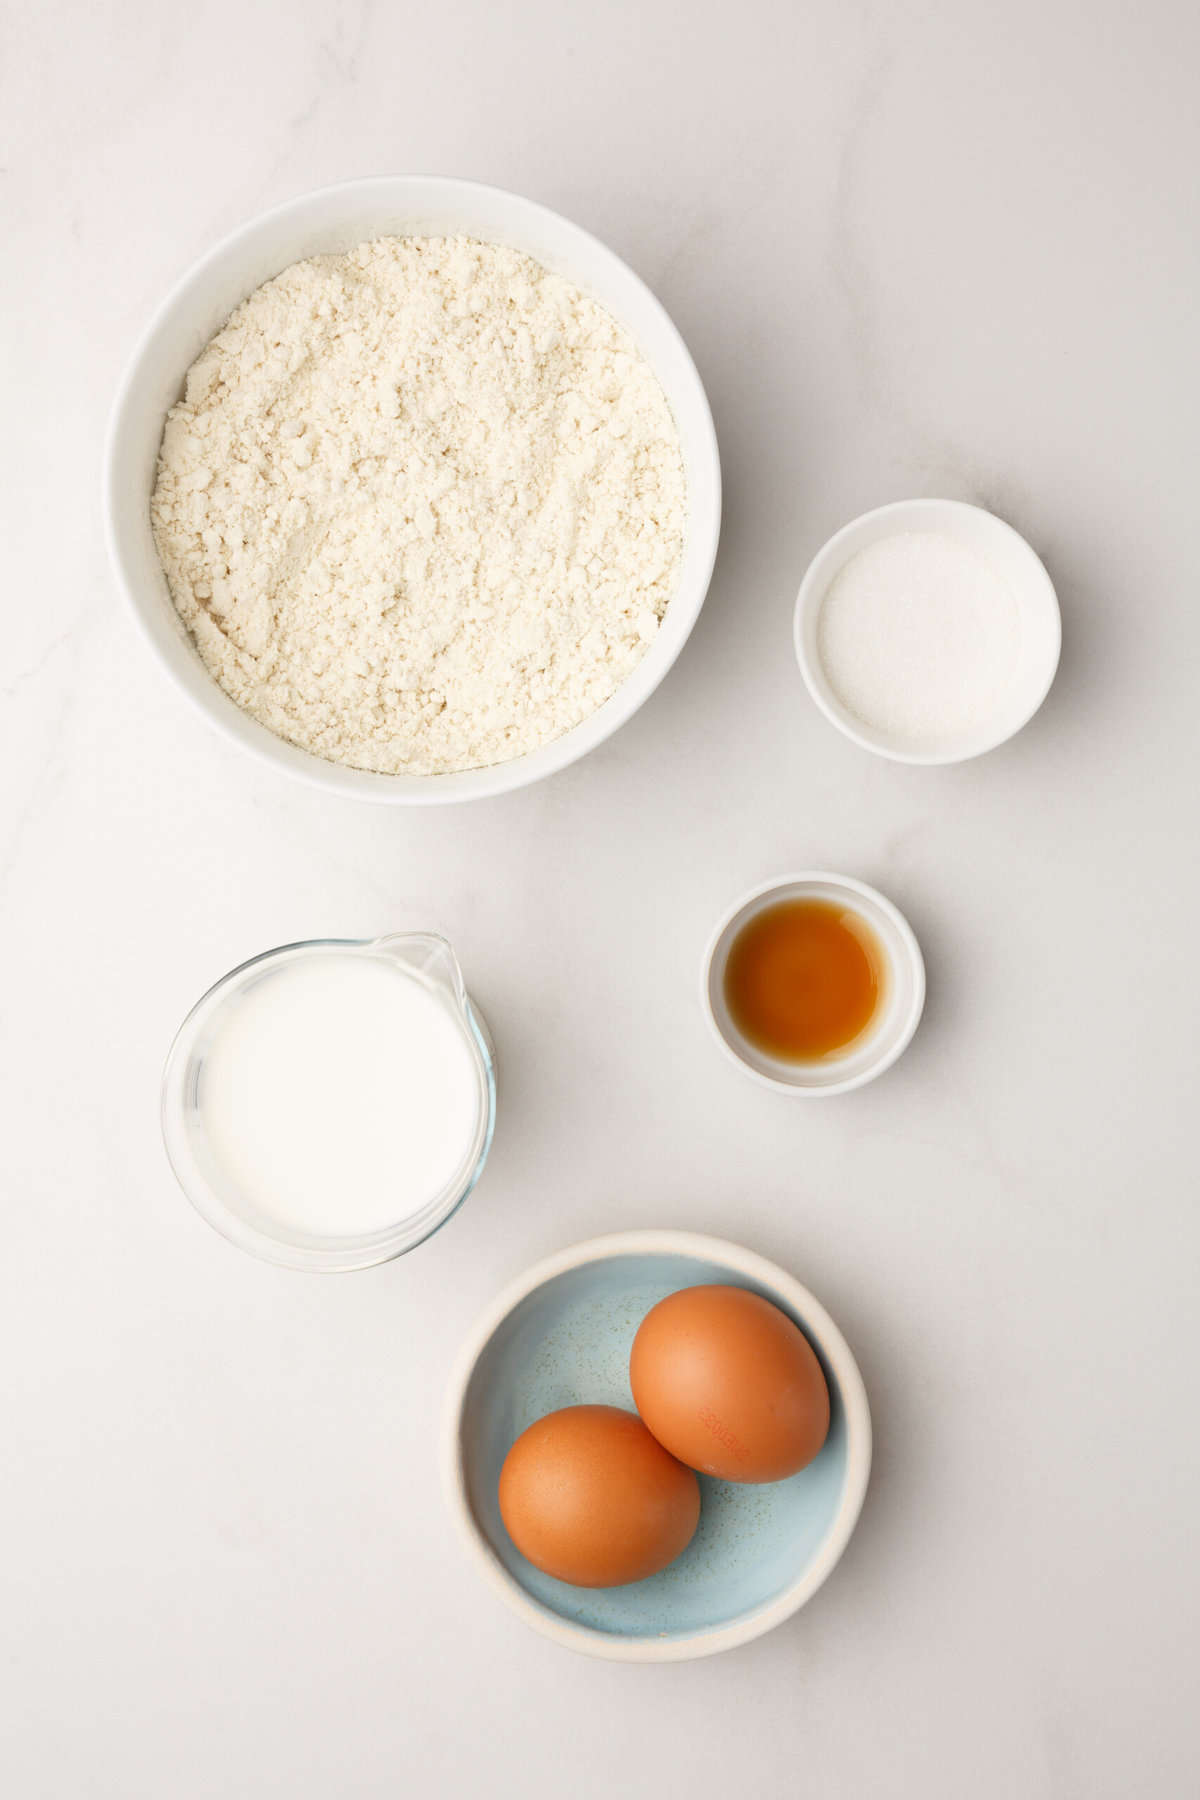 ingredients to make classic bisquick pancakes. 